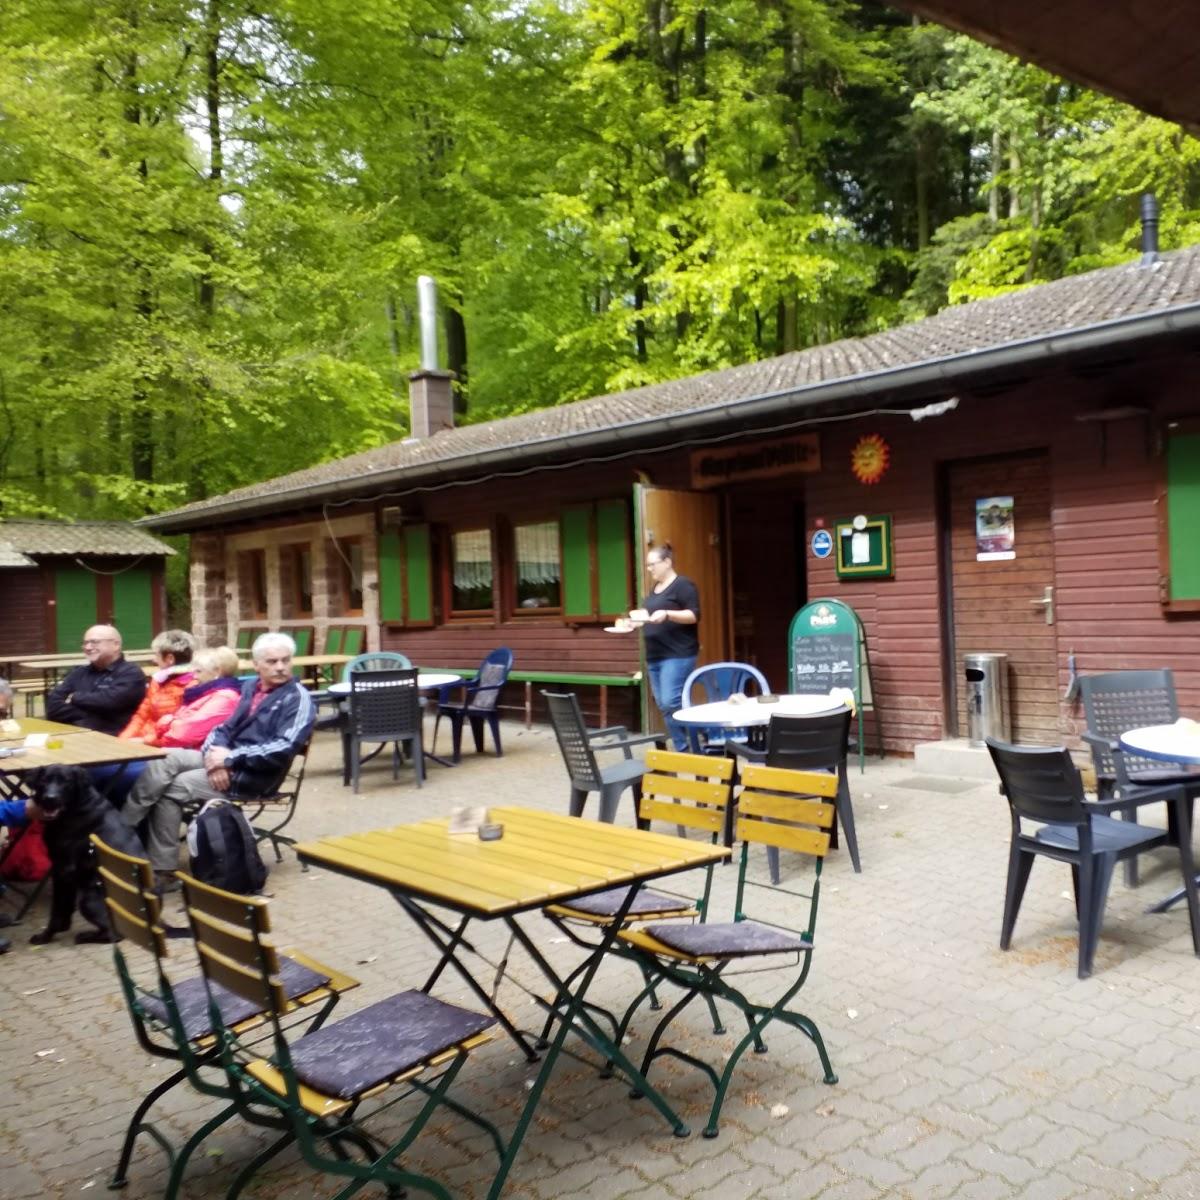 Restaurant "Gimpelwaldhütte" in Hornbach